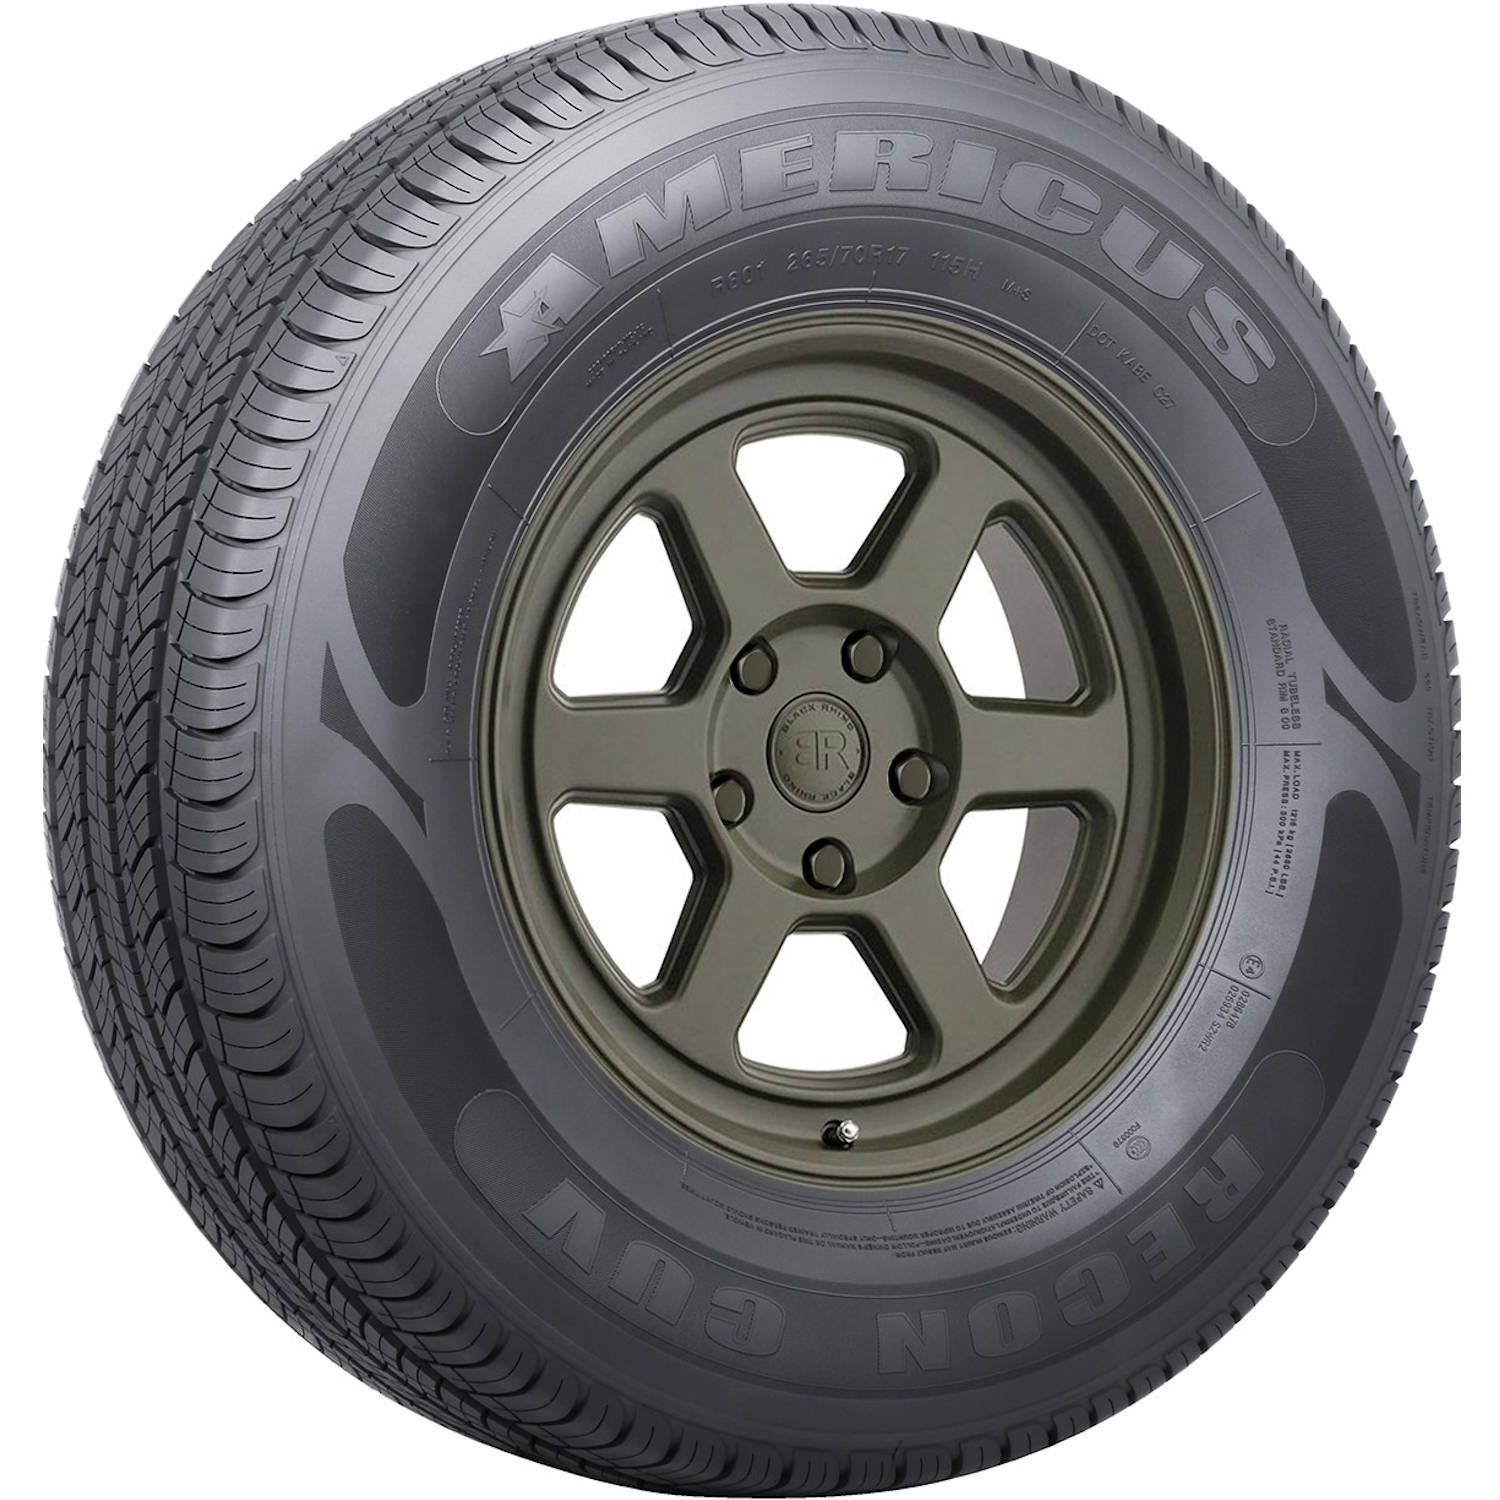 AMERICUS RECON CUV 225/60R17 (27.6X8.9R 17) Tires